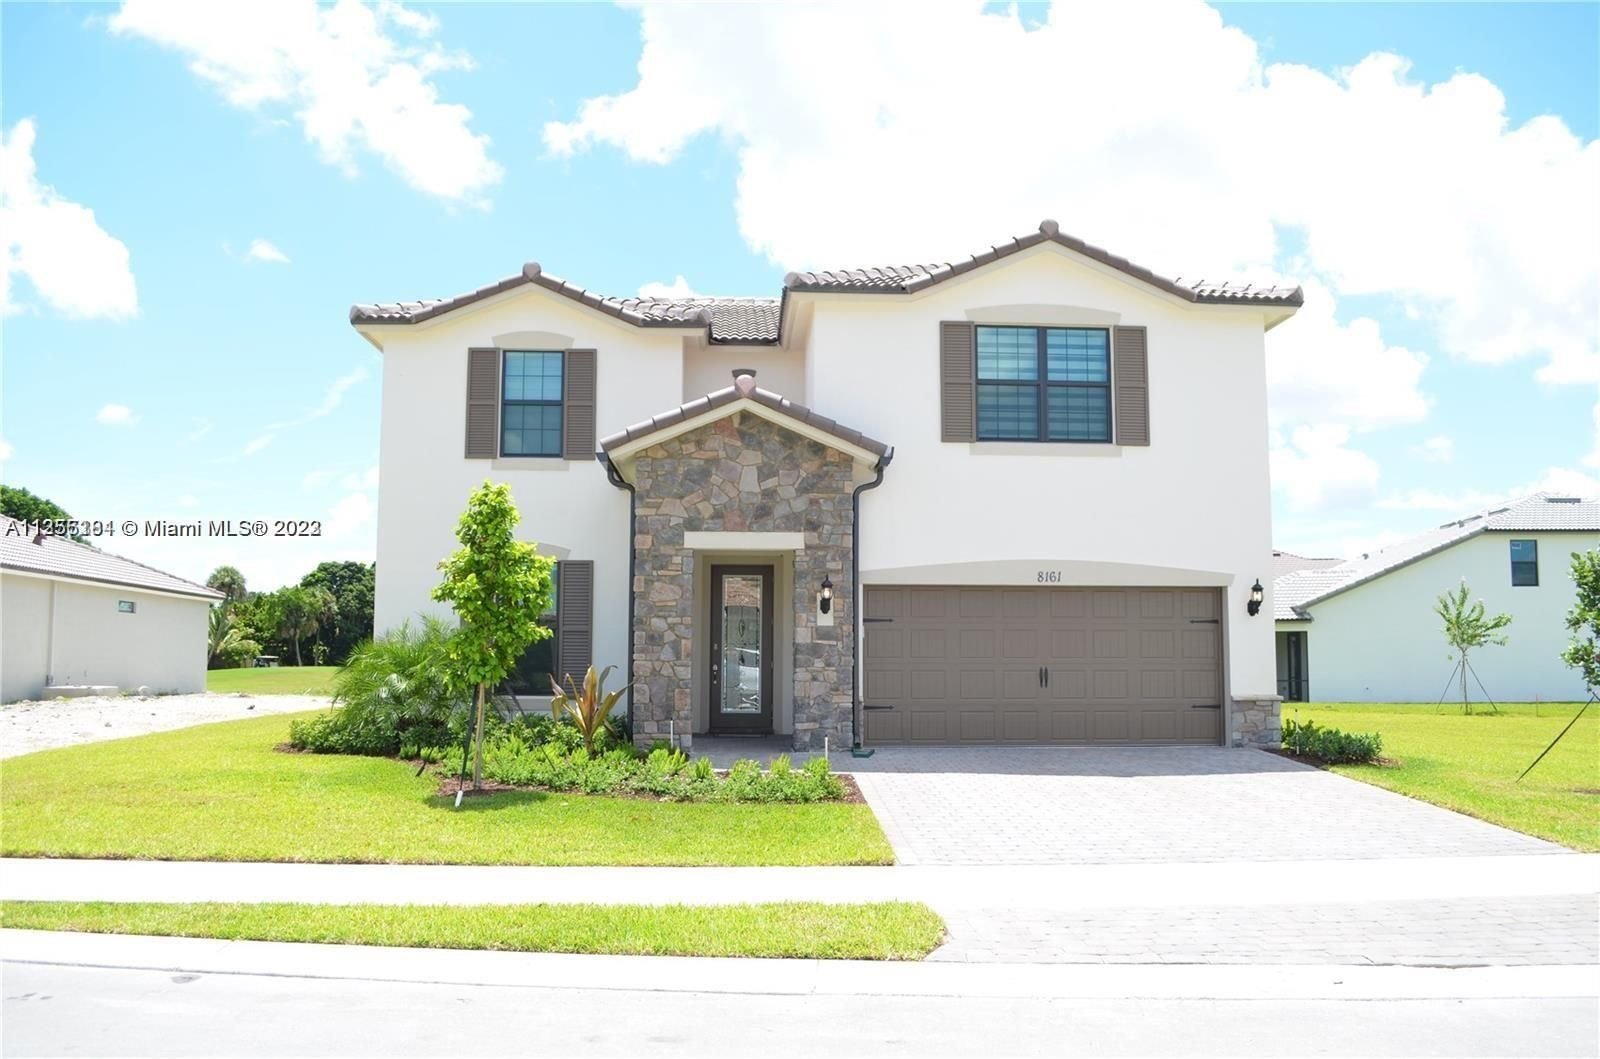 Real estate property located at 8161 78th St, Broward County, Tamarac, FL